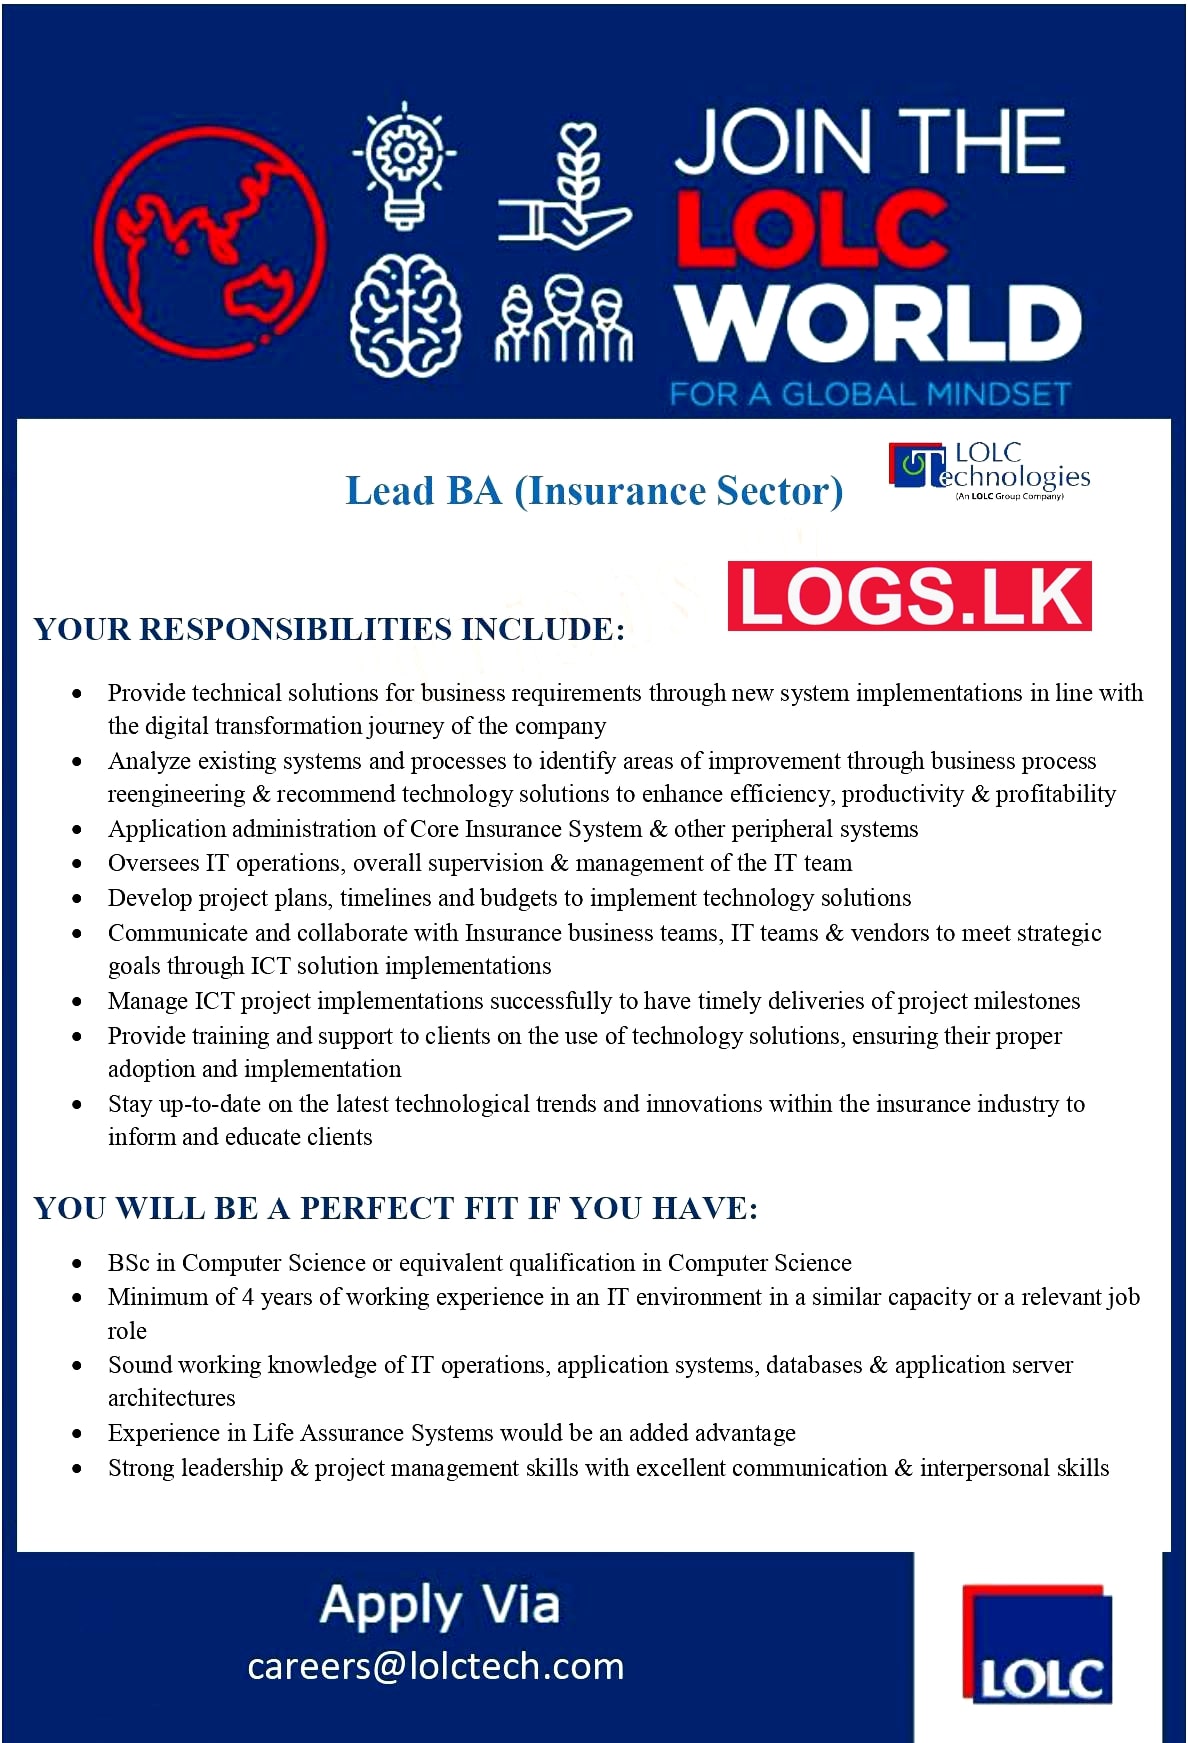 Lead BA (Insurance Sector) Job Vacancy at LOLC Finance Sri Lanka Job Vacancies